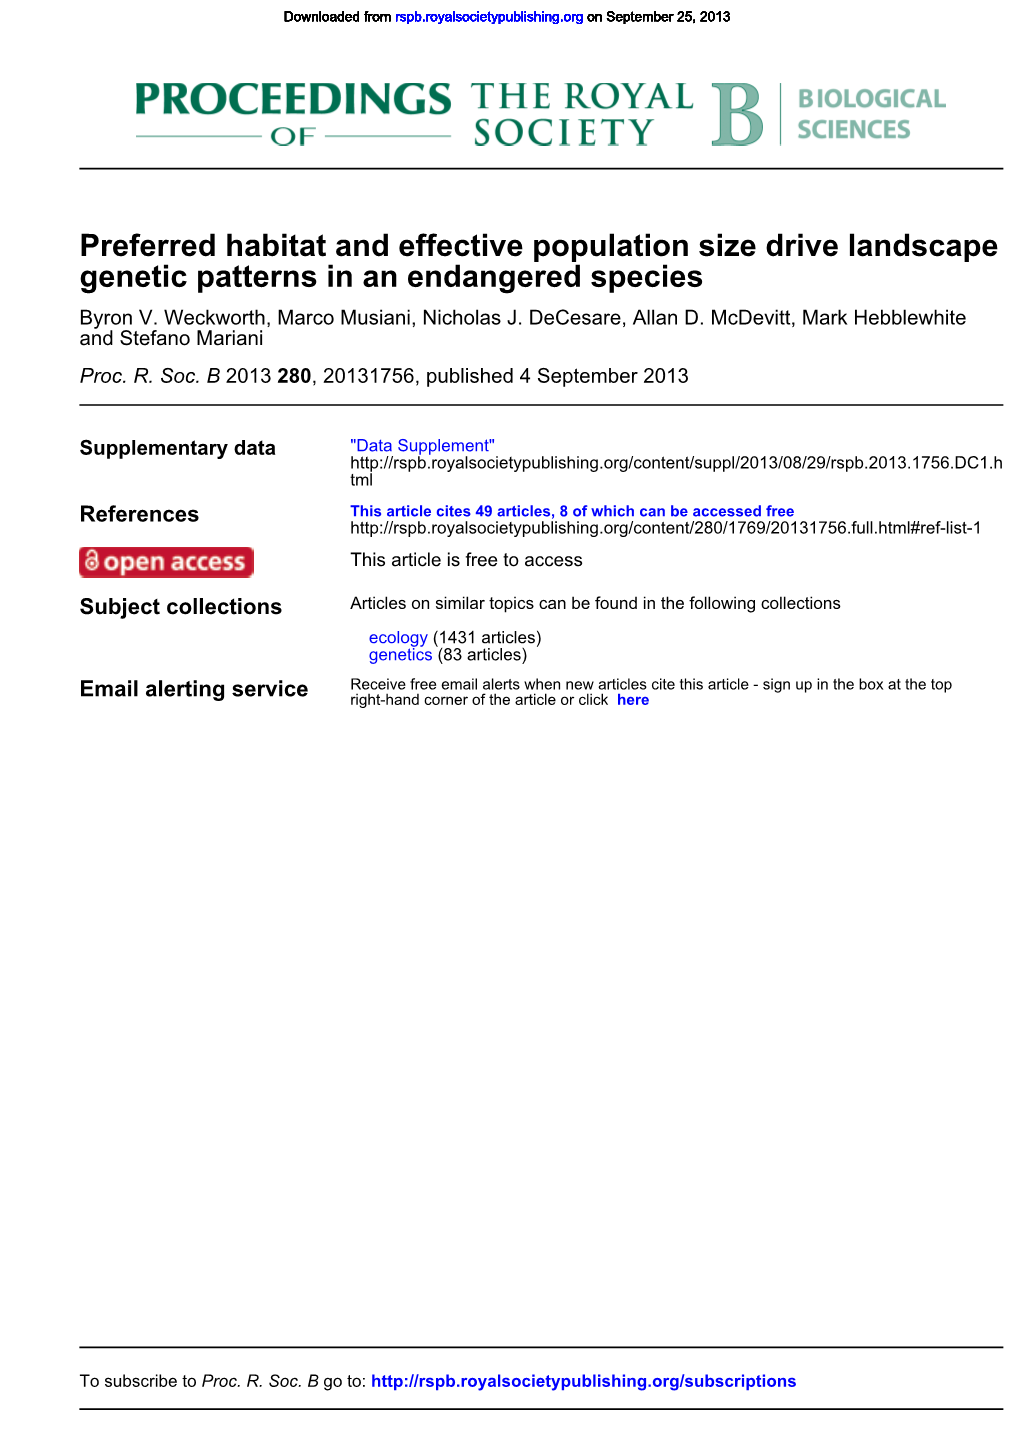 Preferred Habitat and Effective Population Size Drive the Landscape